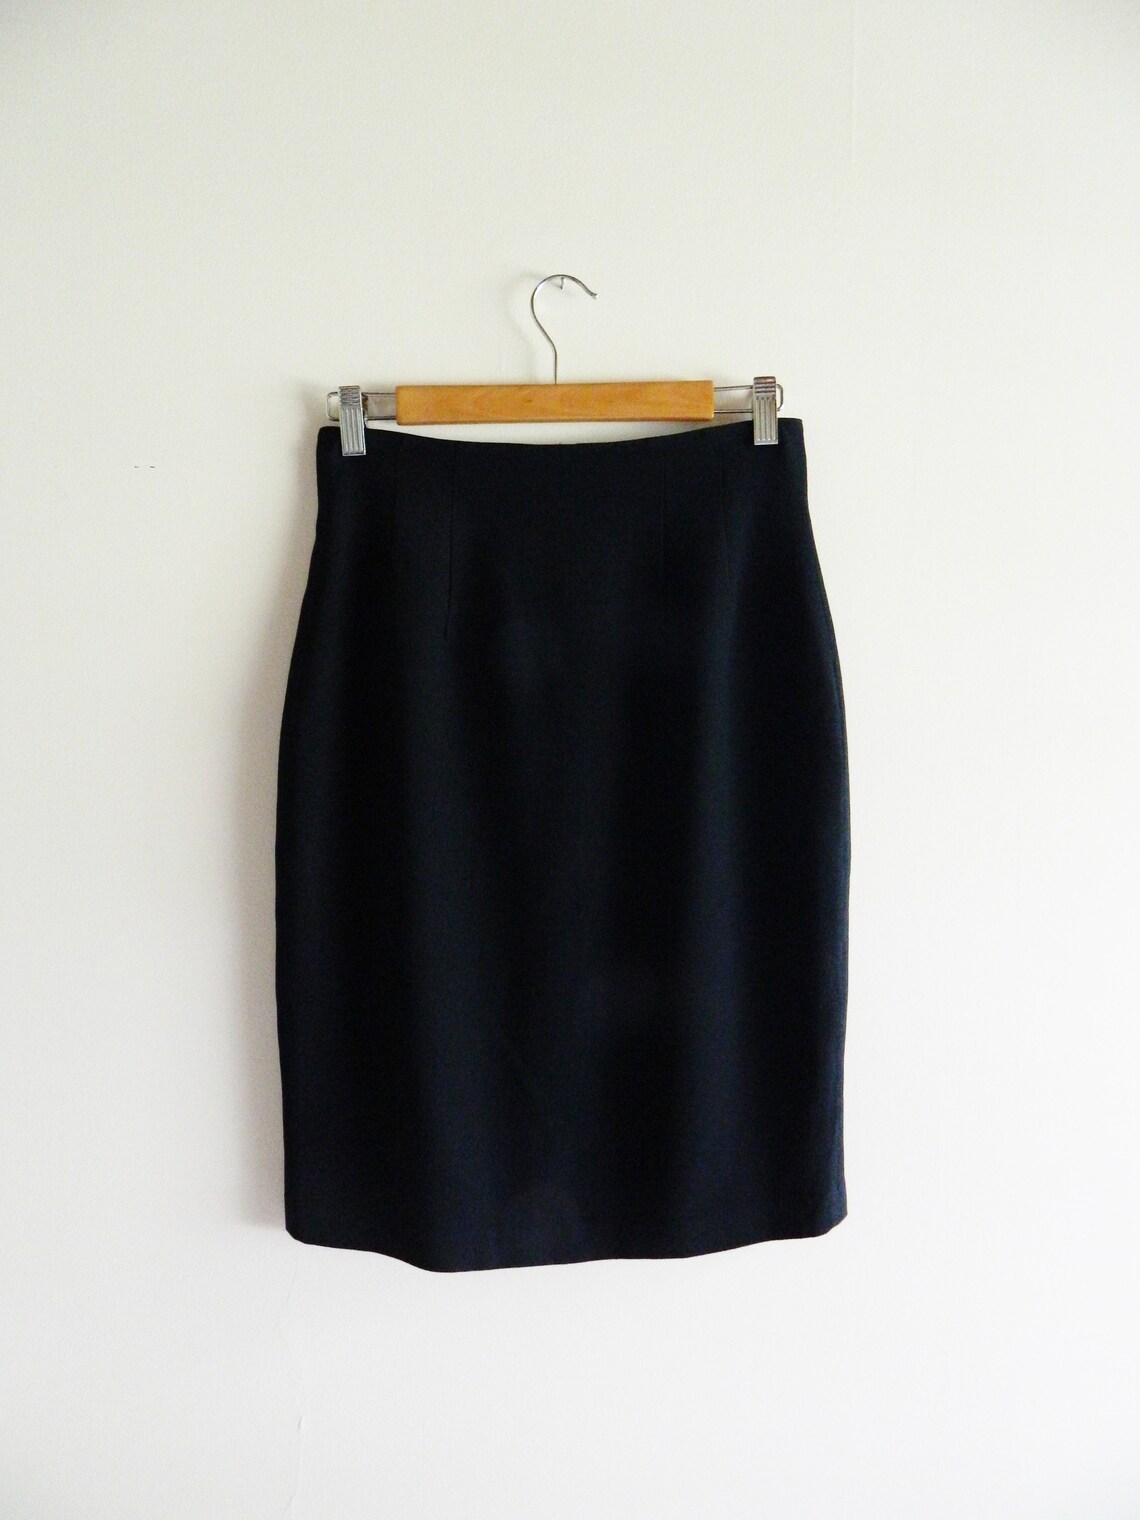 Kenar Petite Black Pencil Skirt 10P / Vintage | Etsy